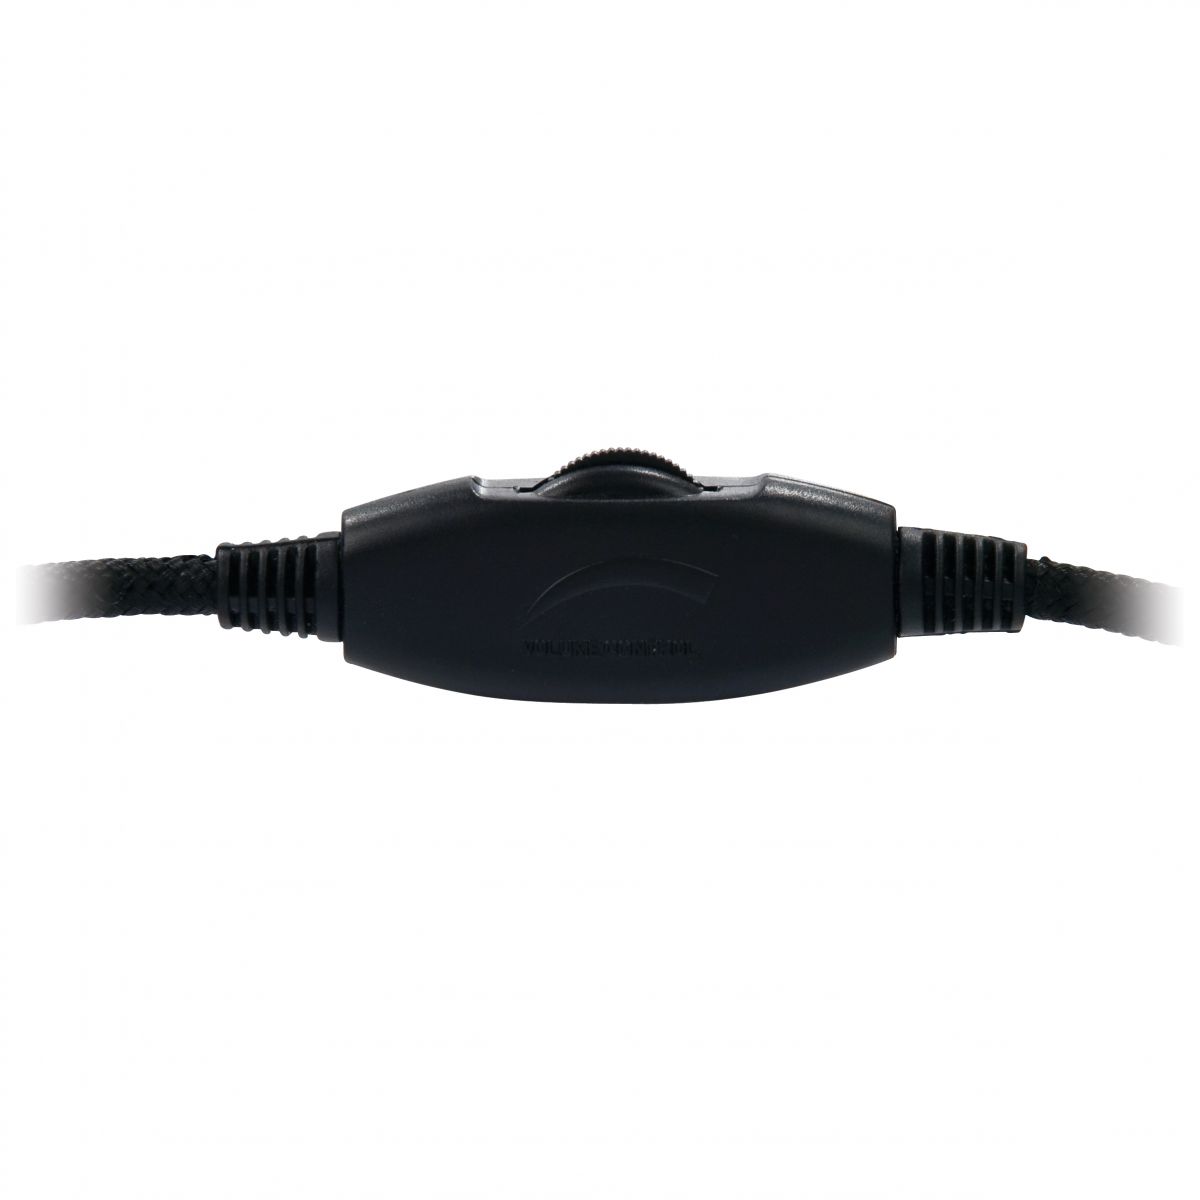 Fone C3 Tech Headset Gamer Pterodax Prta/Prto c/ Microfone